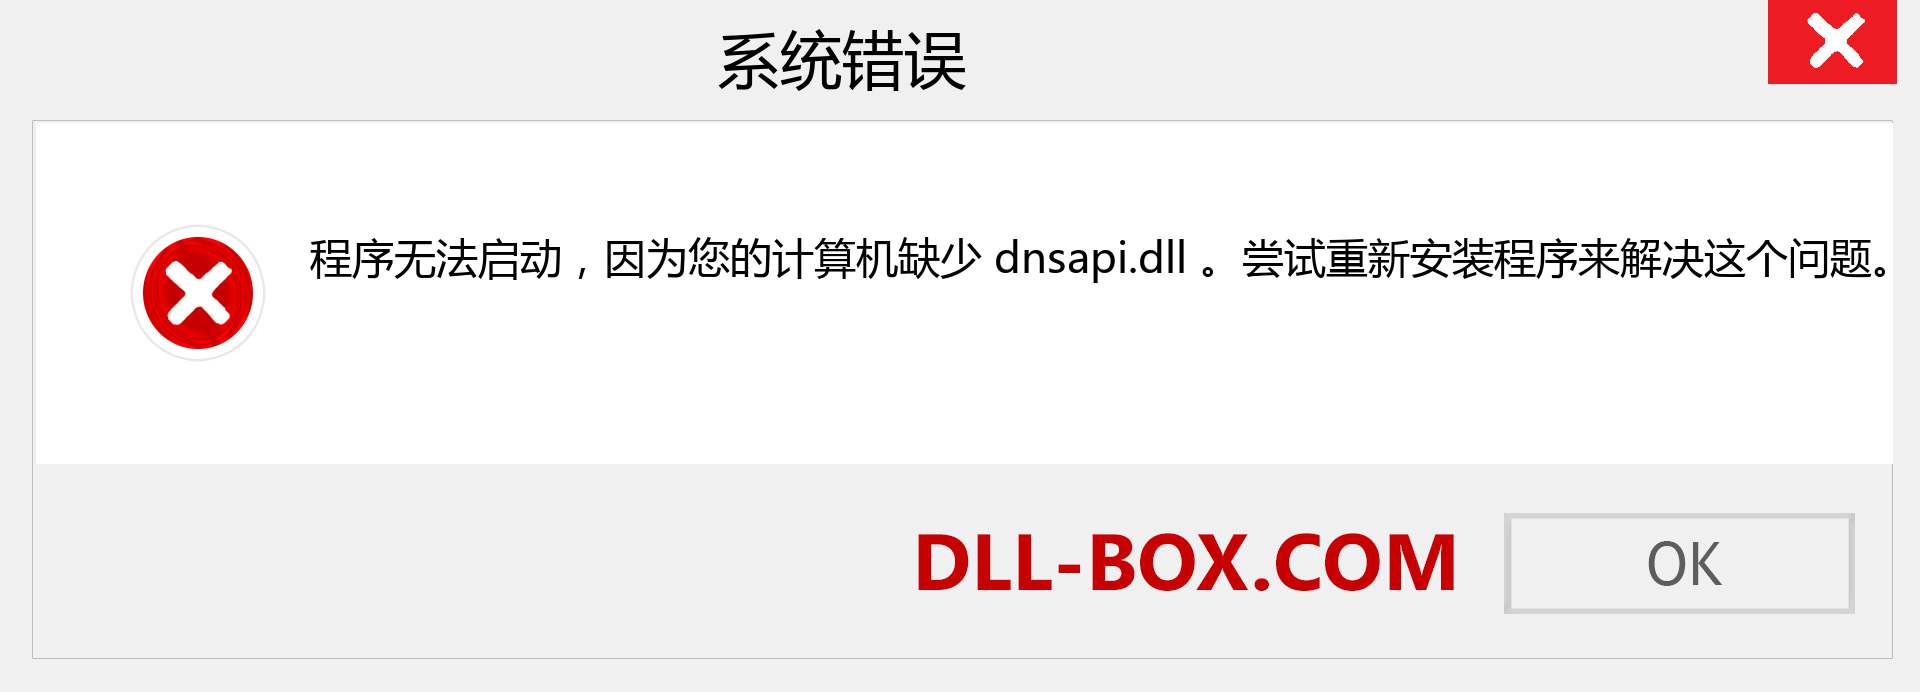 dnsapi.dll 文件丢失？。 适用于 Windows 7、8、10 的下载 - 修复 Windows、照片、图像上的 dnsapi dll 丢失错误